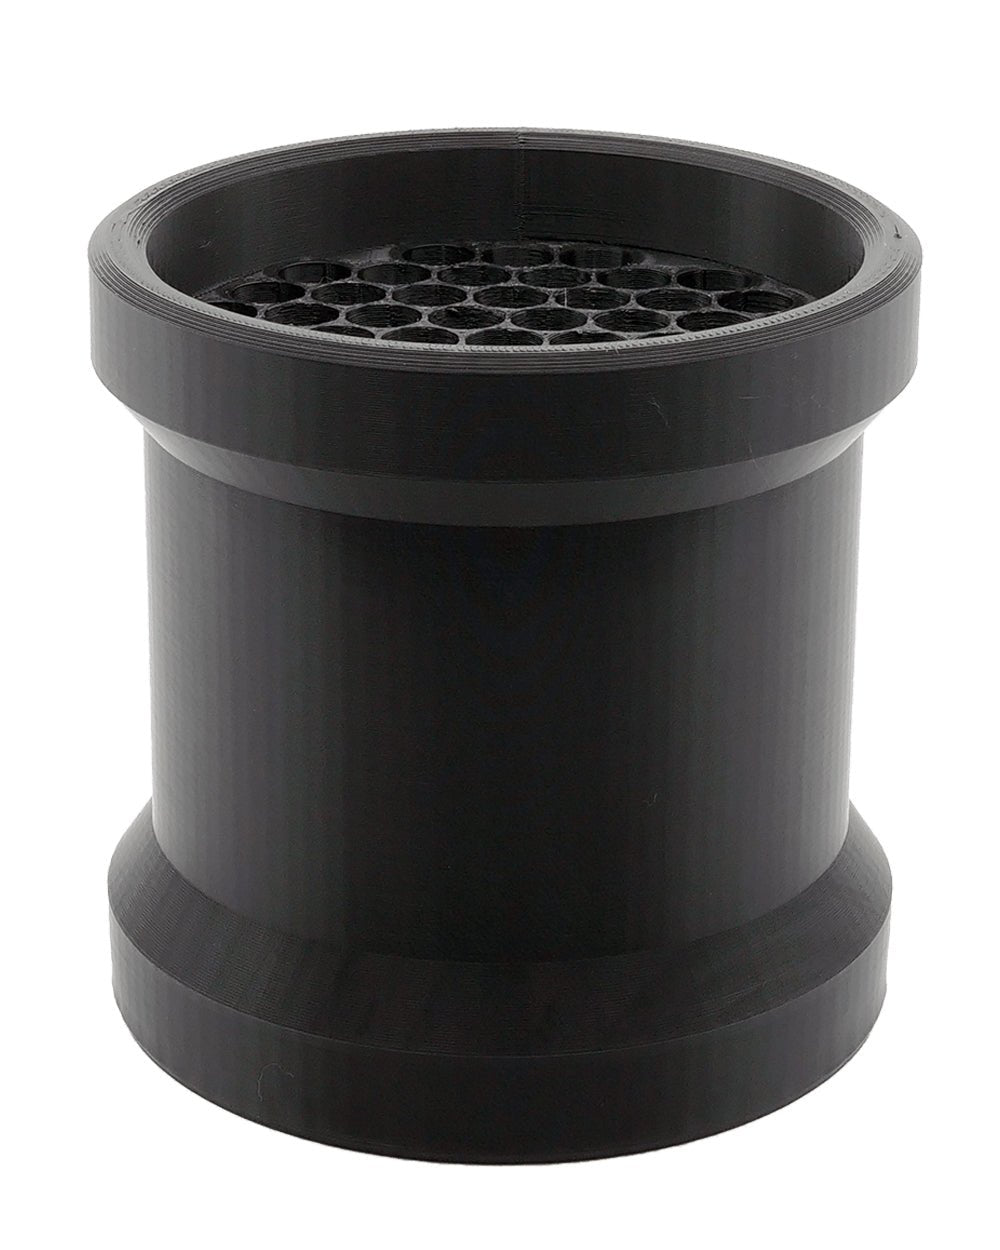 HUMBOLDT | Black Pre-Rolled Cones Filling Machine Cartridge 109mm | Fill 55 Cones Per Run - 1